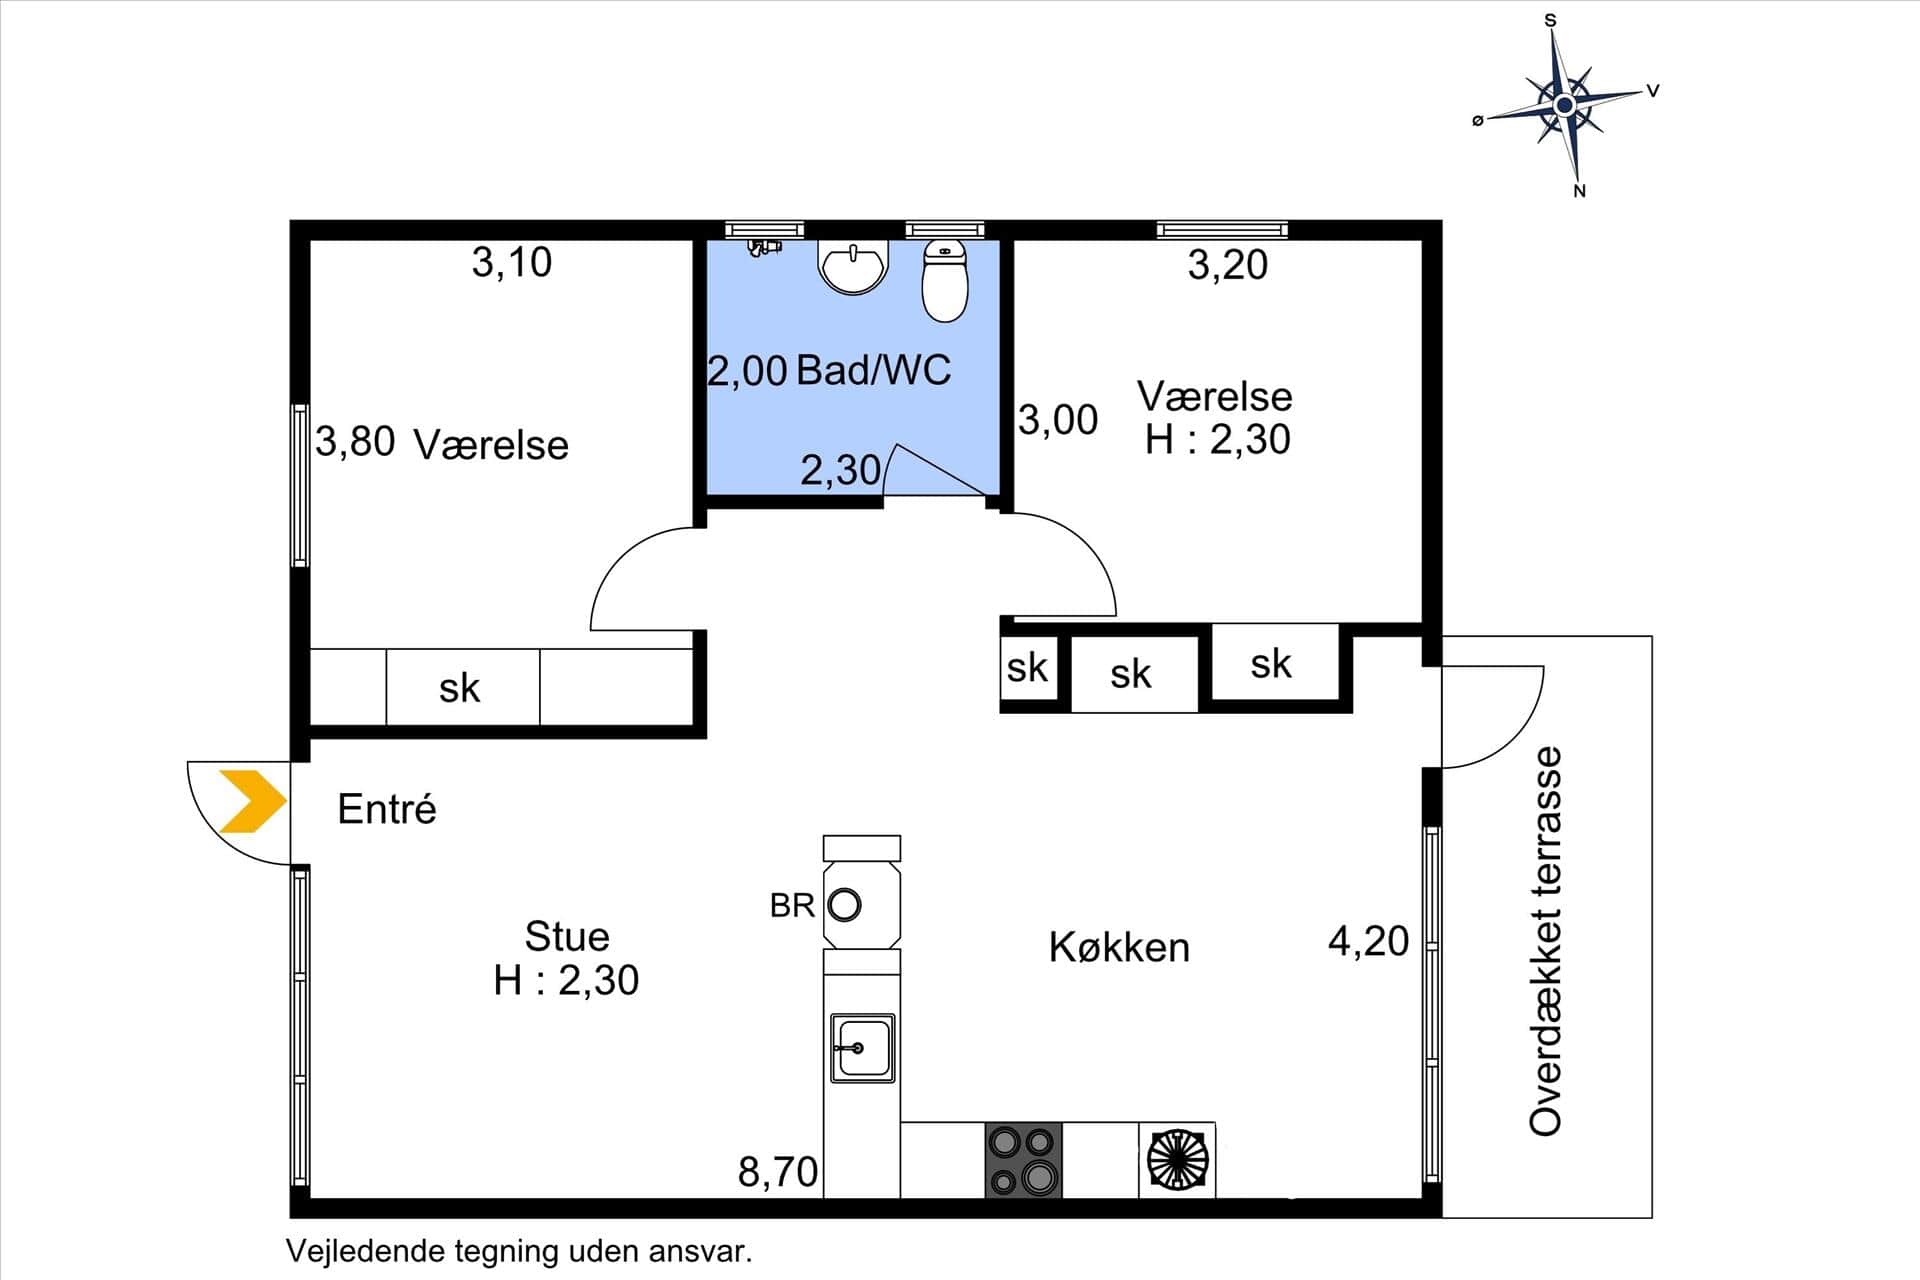 Interieur 14-174 Vakantiehuis M15022, Bøtølundvej 187, DK - 4873 Væggerløse